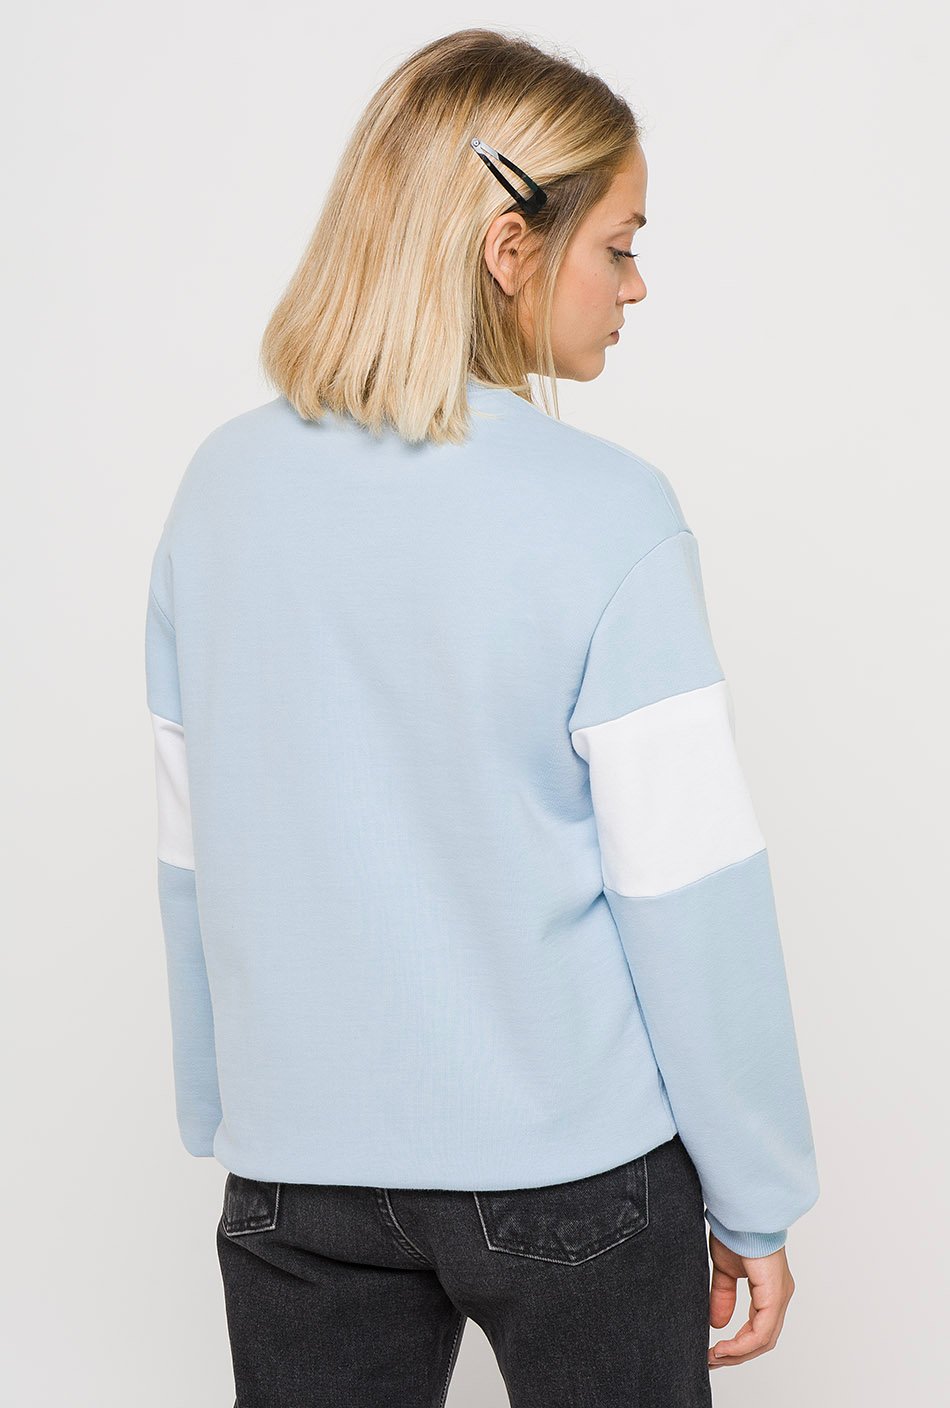 Brooke blau/weißes Sweatshirt